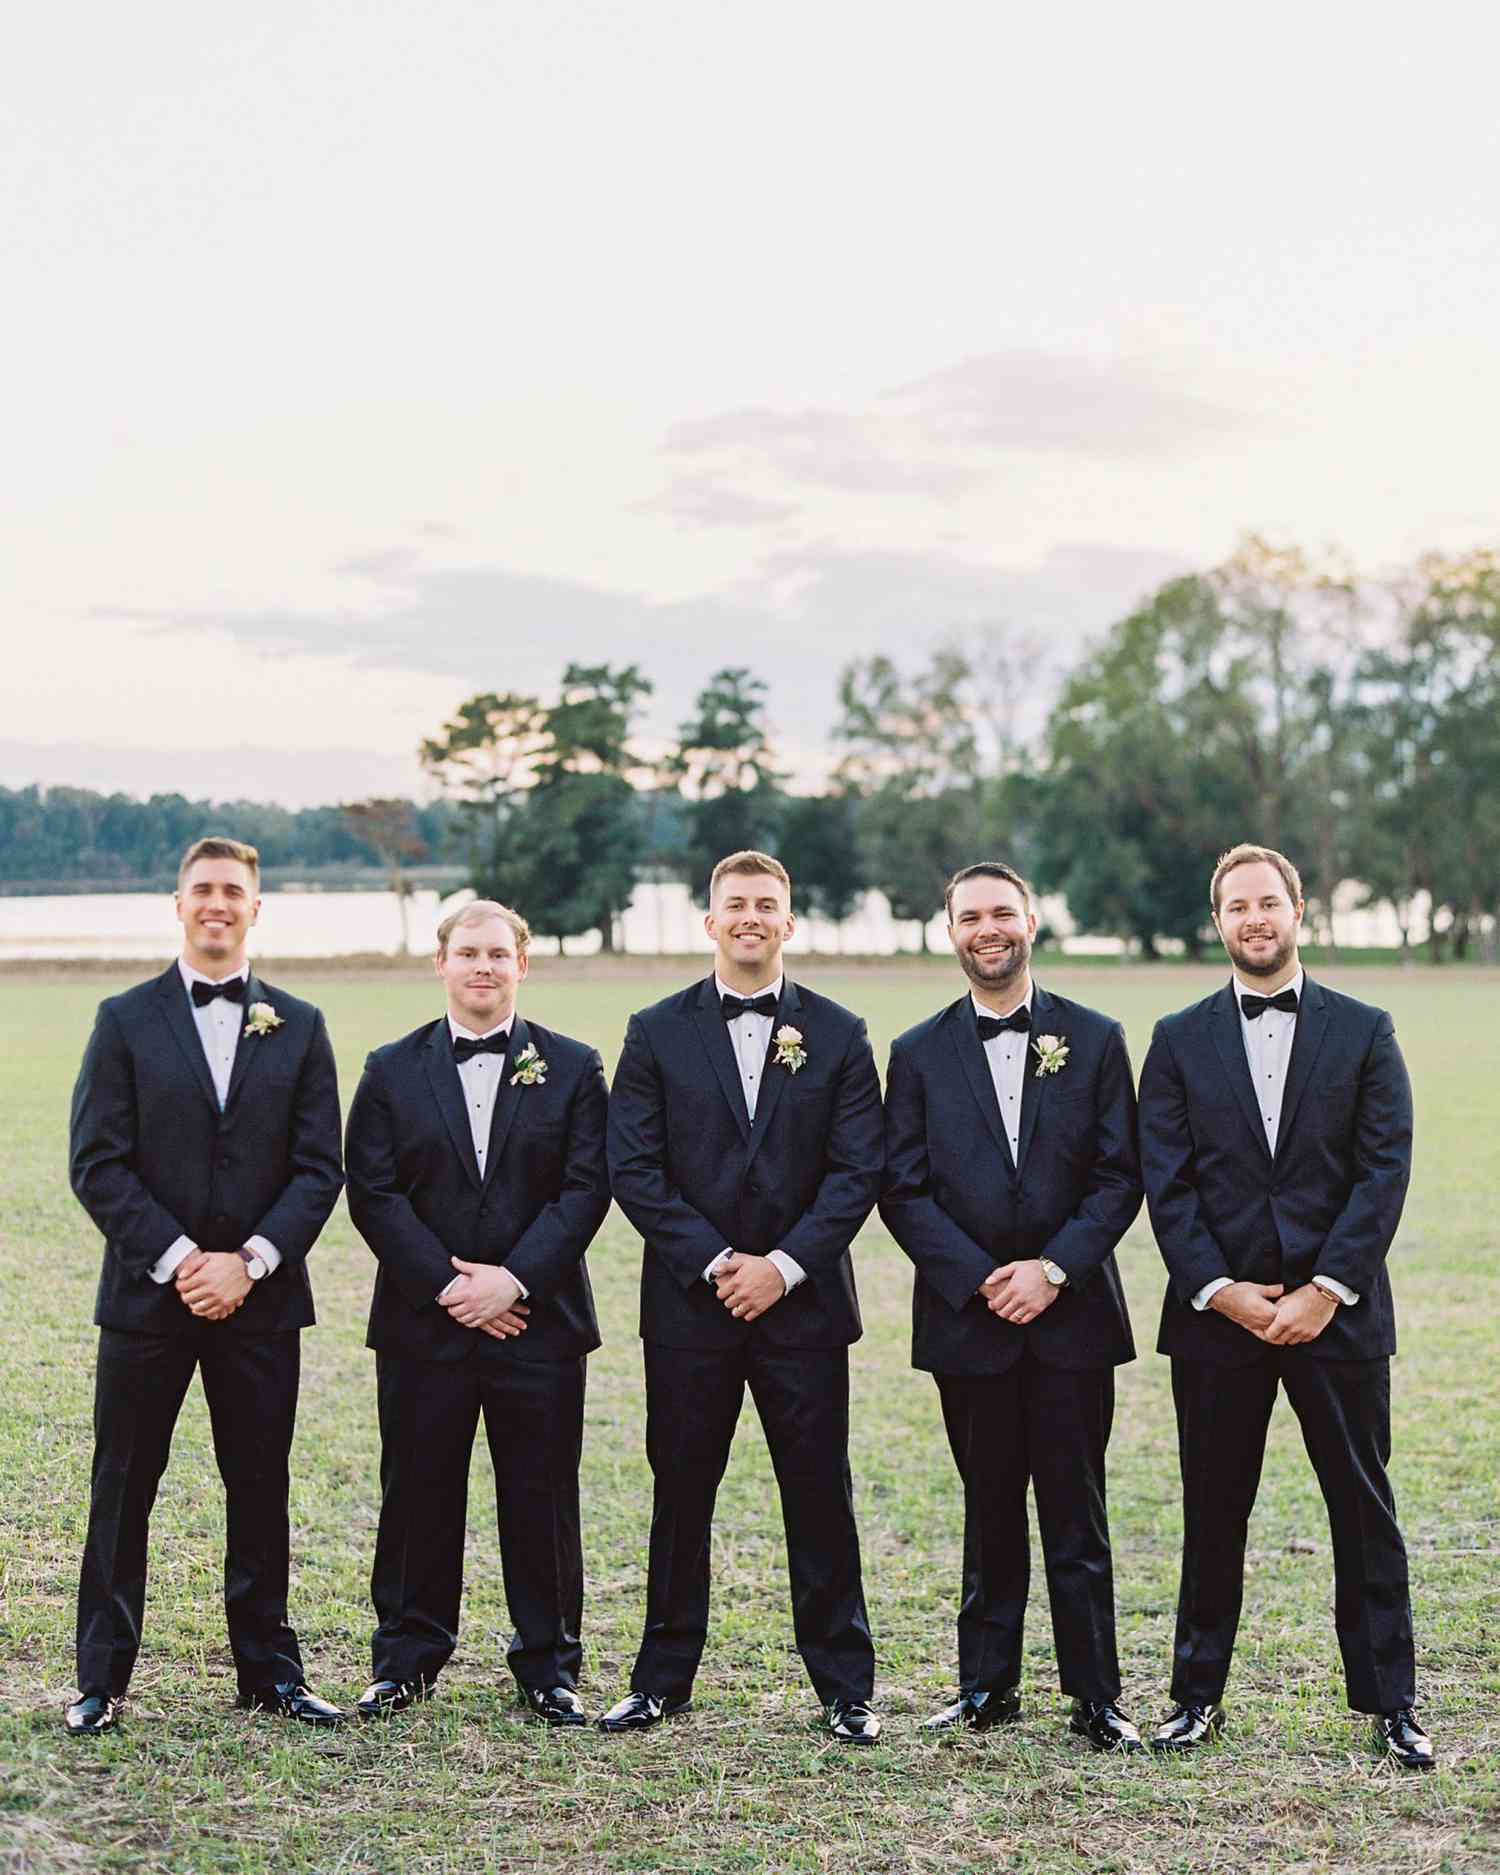 groomsmen posing tuxedos outdoors